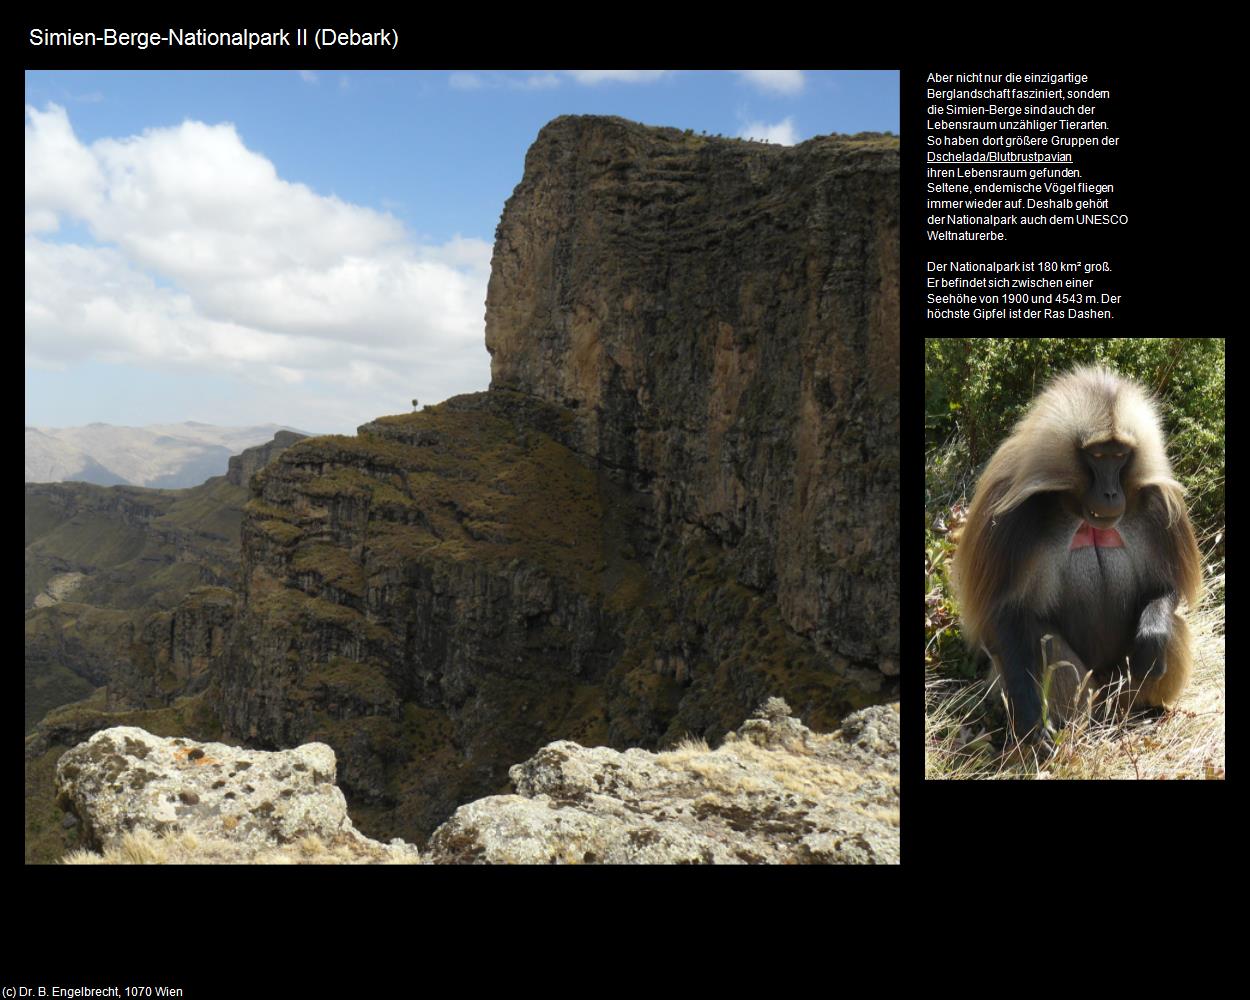 Simien-Berge-Nationalpark II (Debark) in Äthiopien(c)B.Engelbrecht